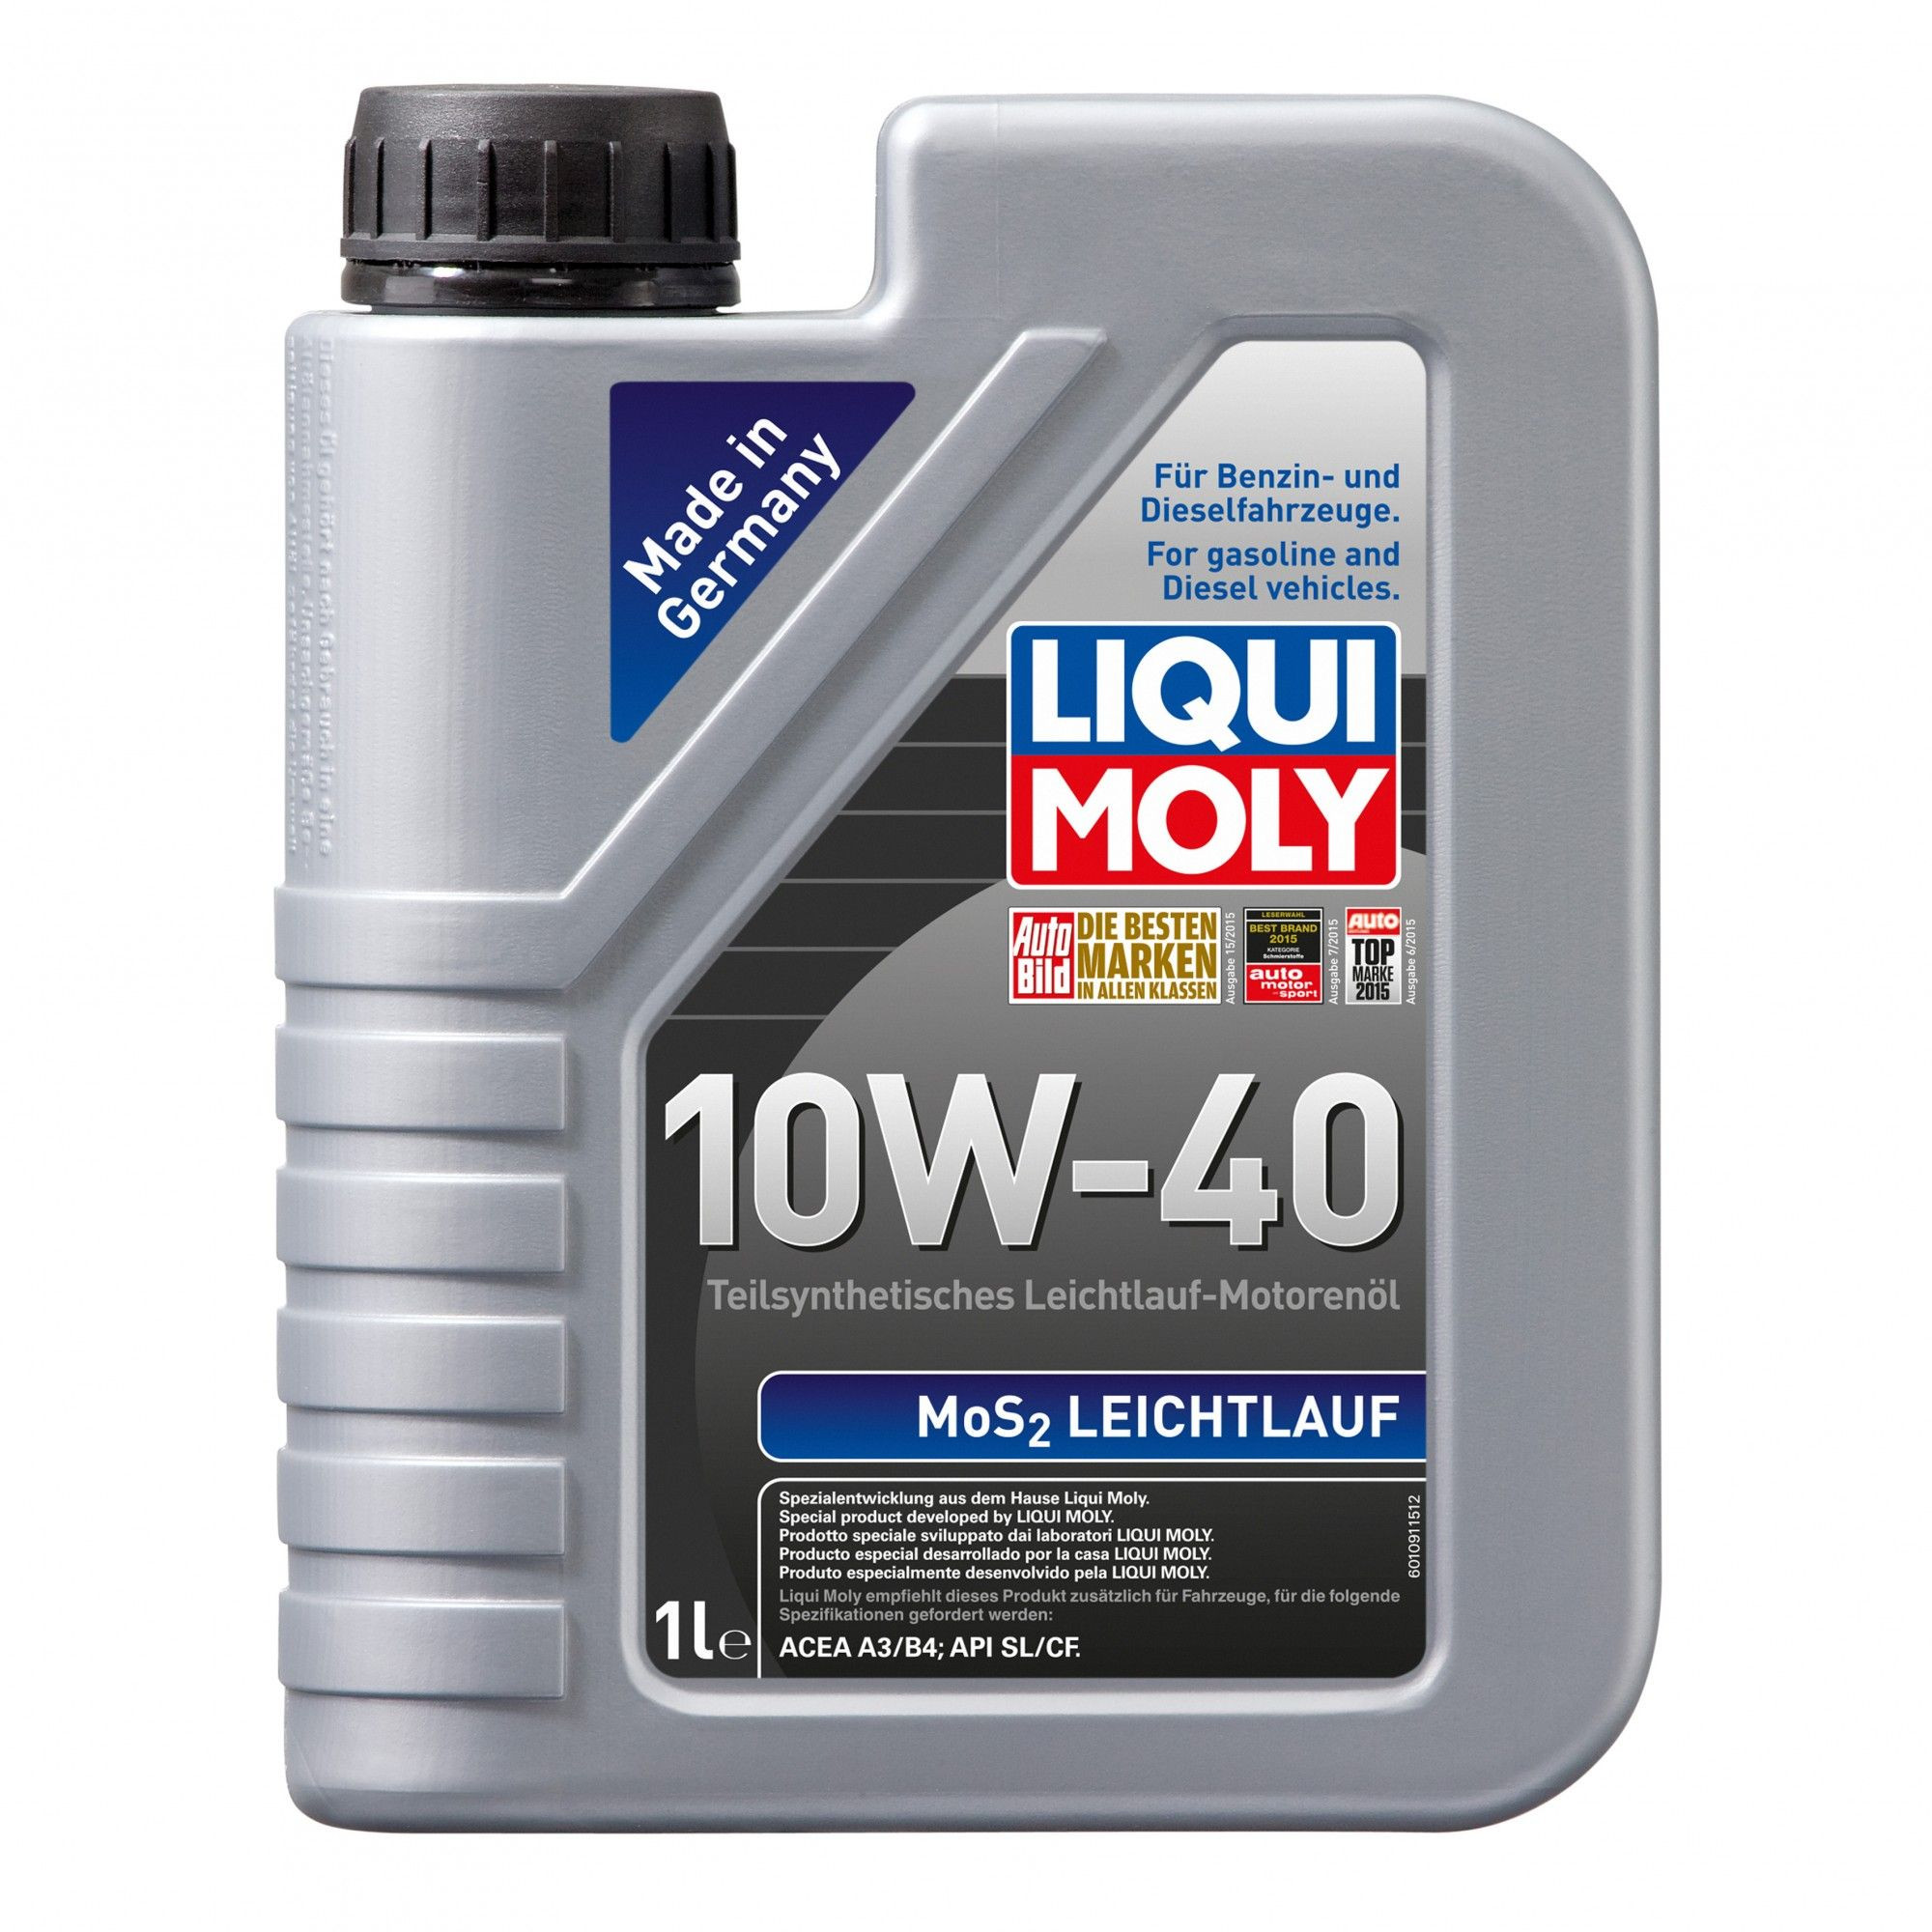 10W-40 Liqui Moly 1091 MoS2 Leichtlauf Motoröl 1 Liter